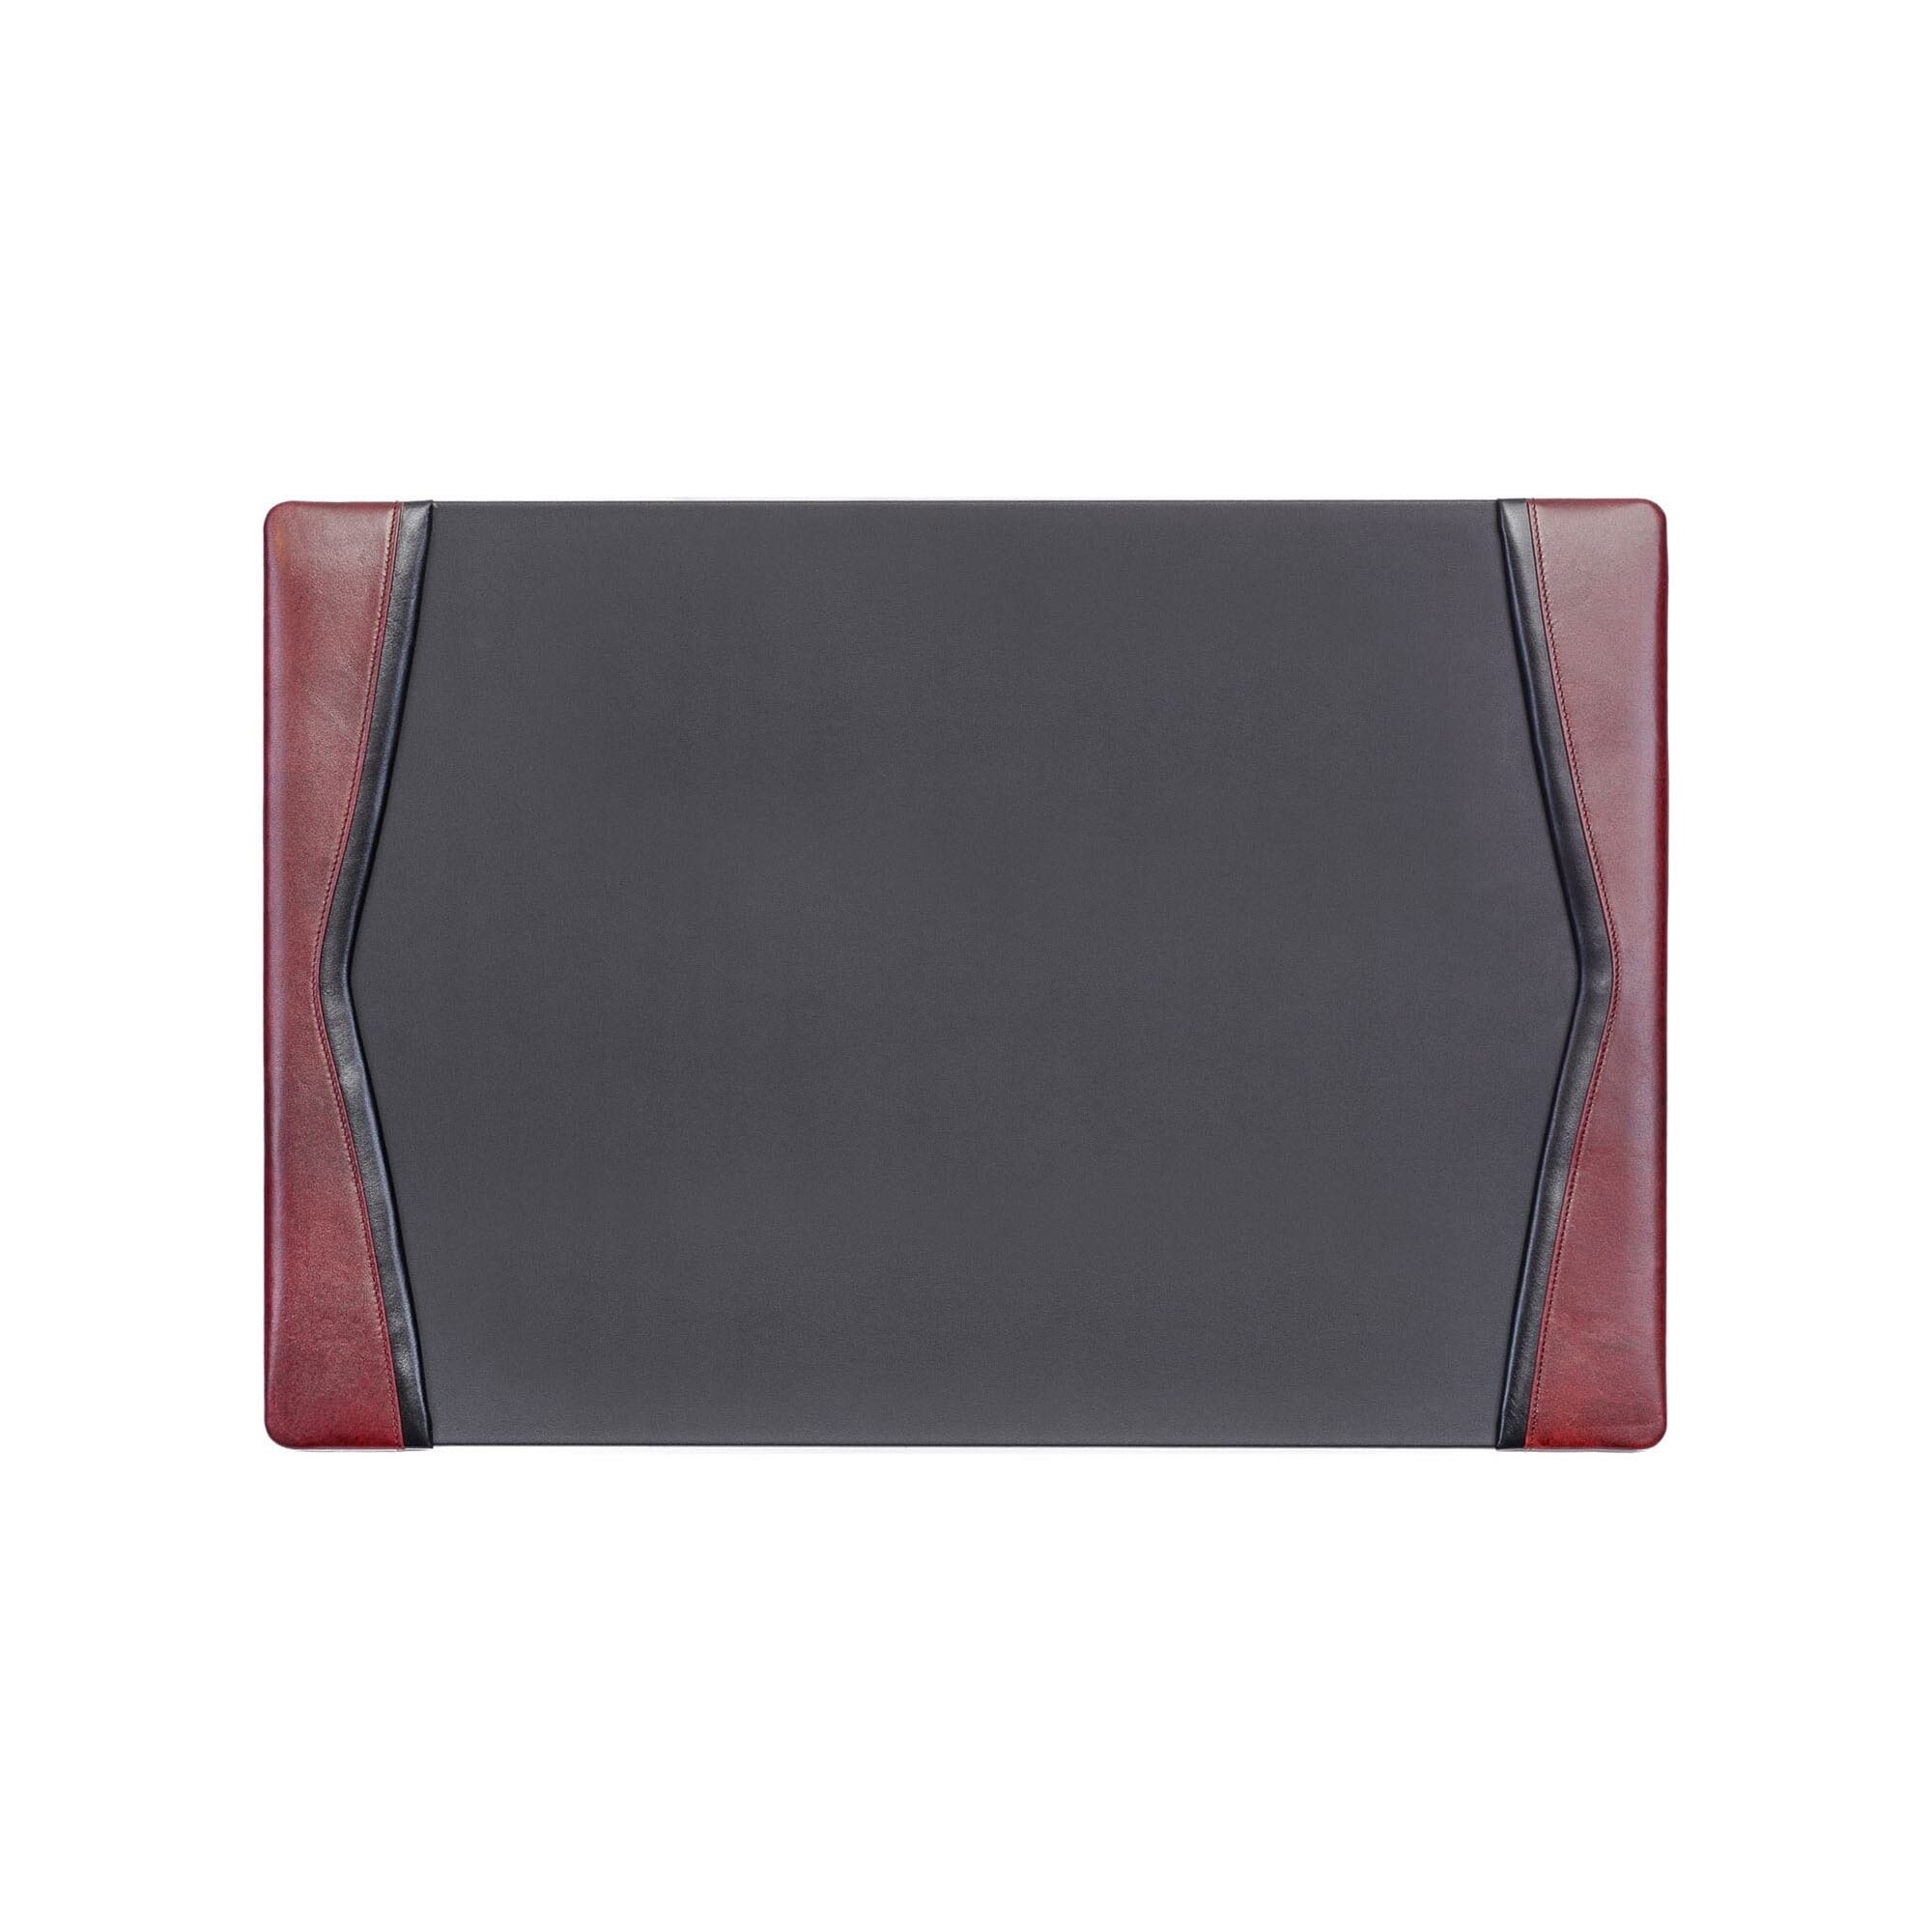 Shop Dacasso Black And Burgundy Leather Desk Pad With Felt Bottom